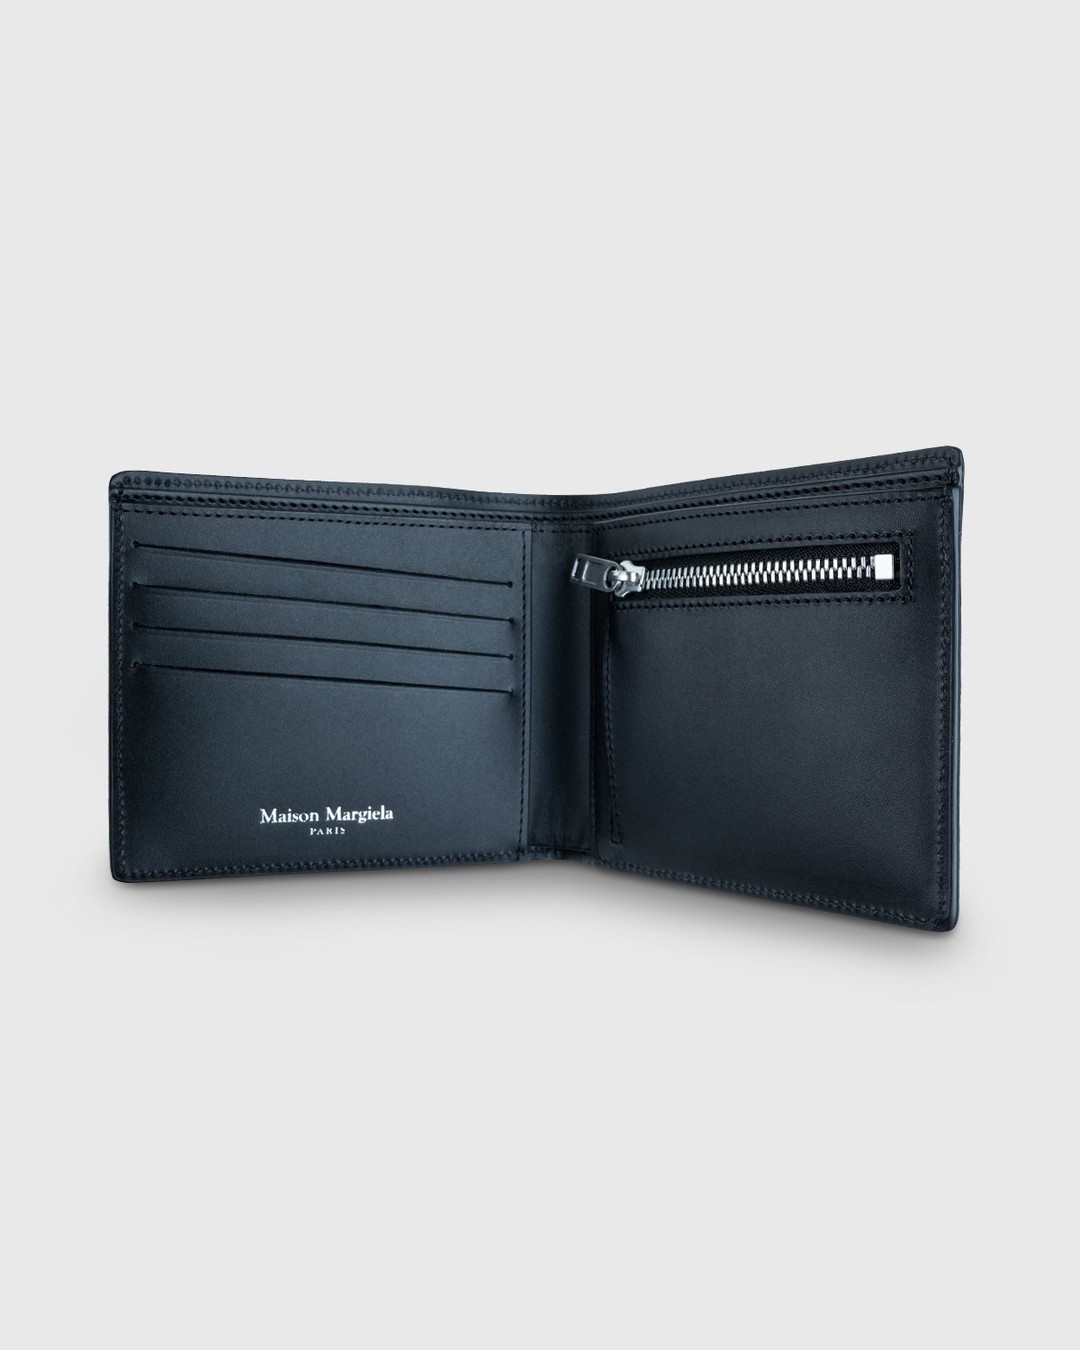 Maison Margiela – Leather Wallet Black - Wallets - Black - Image 3